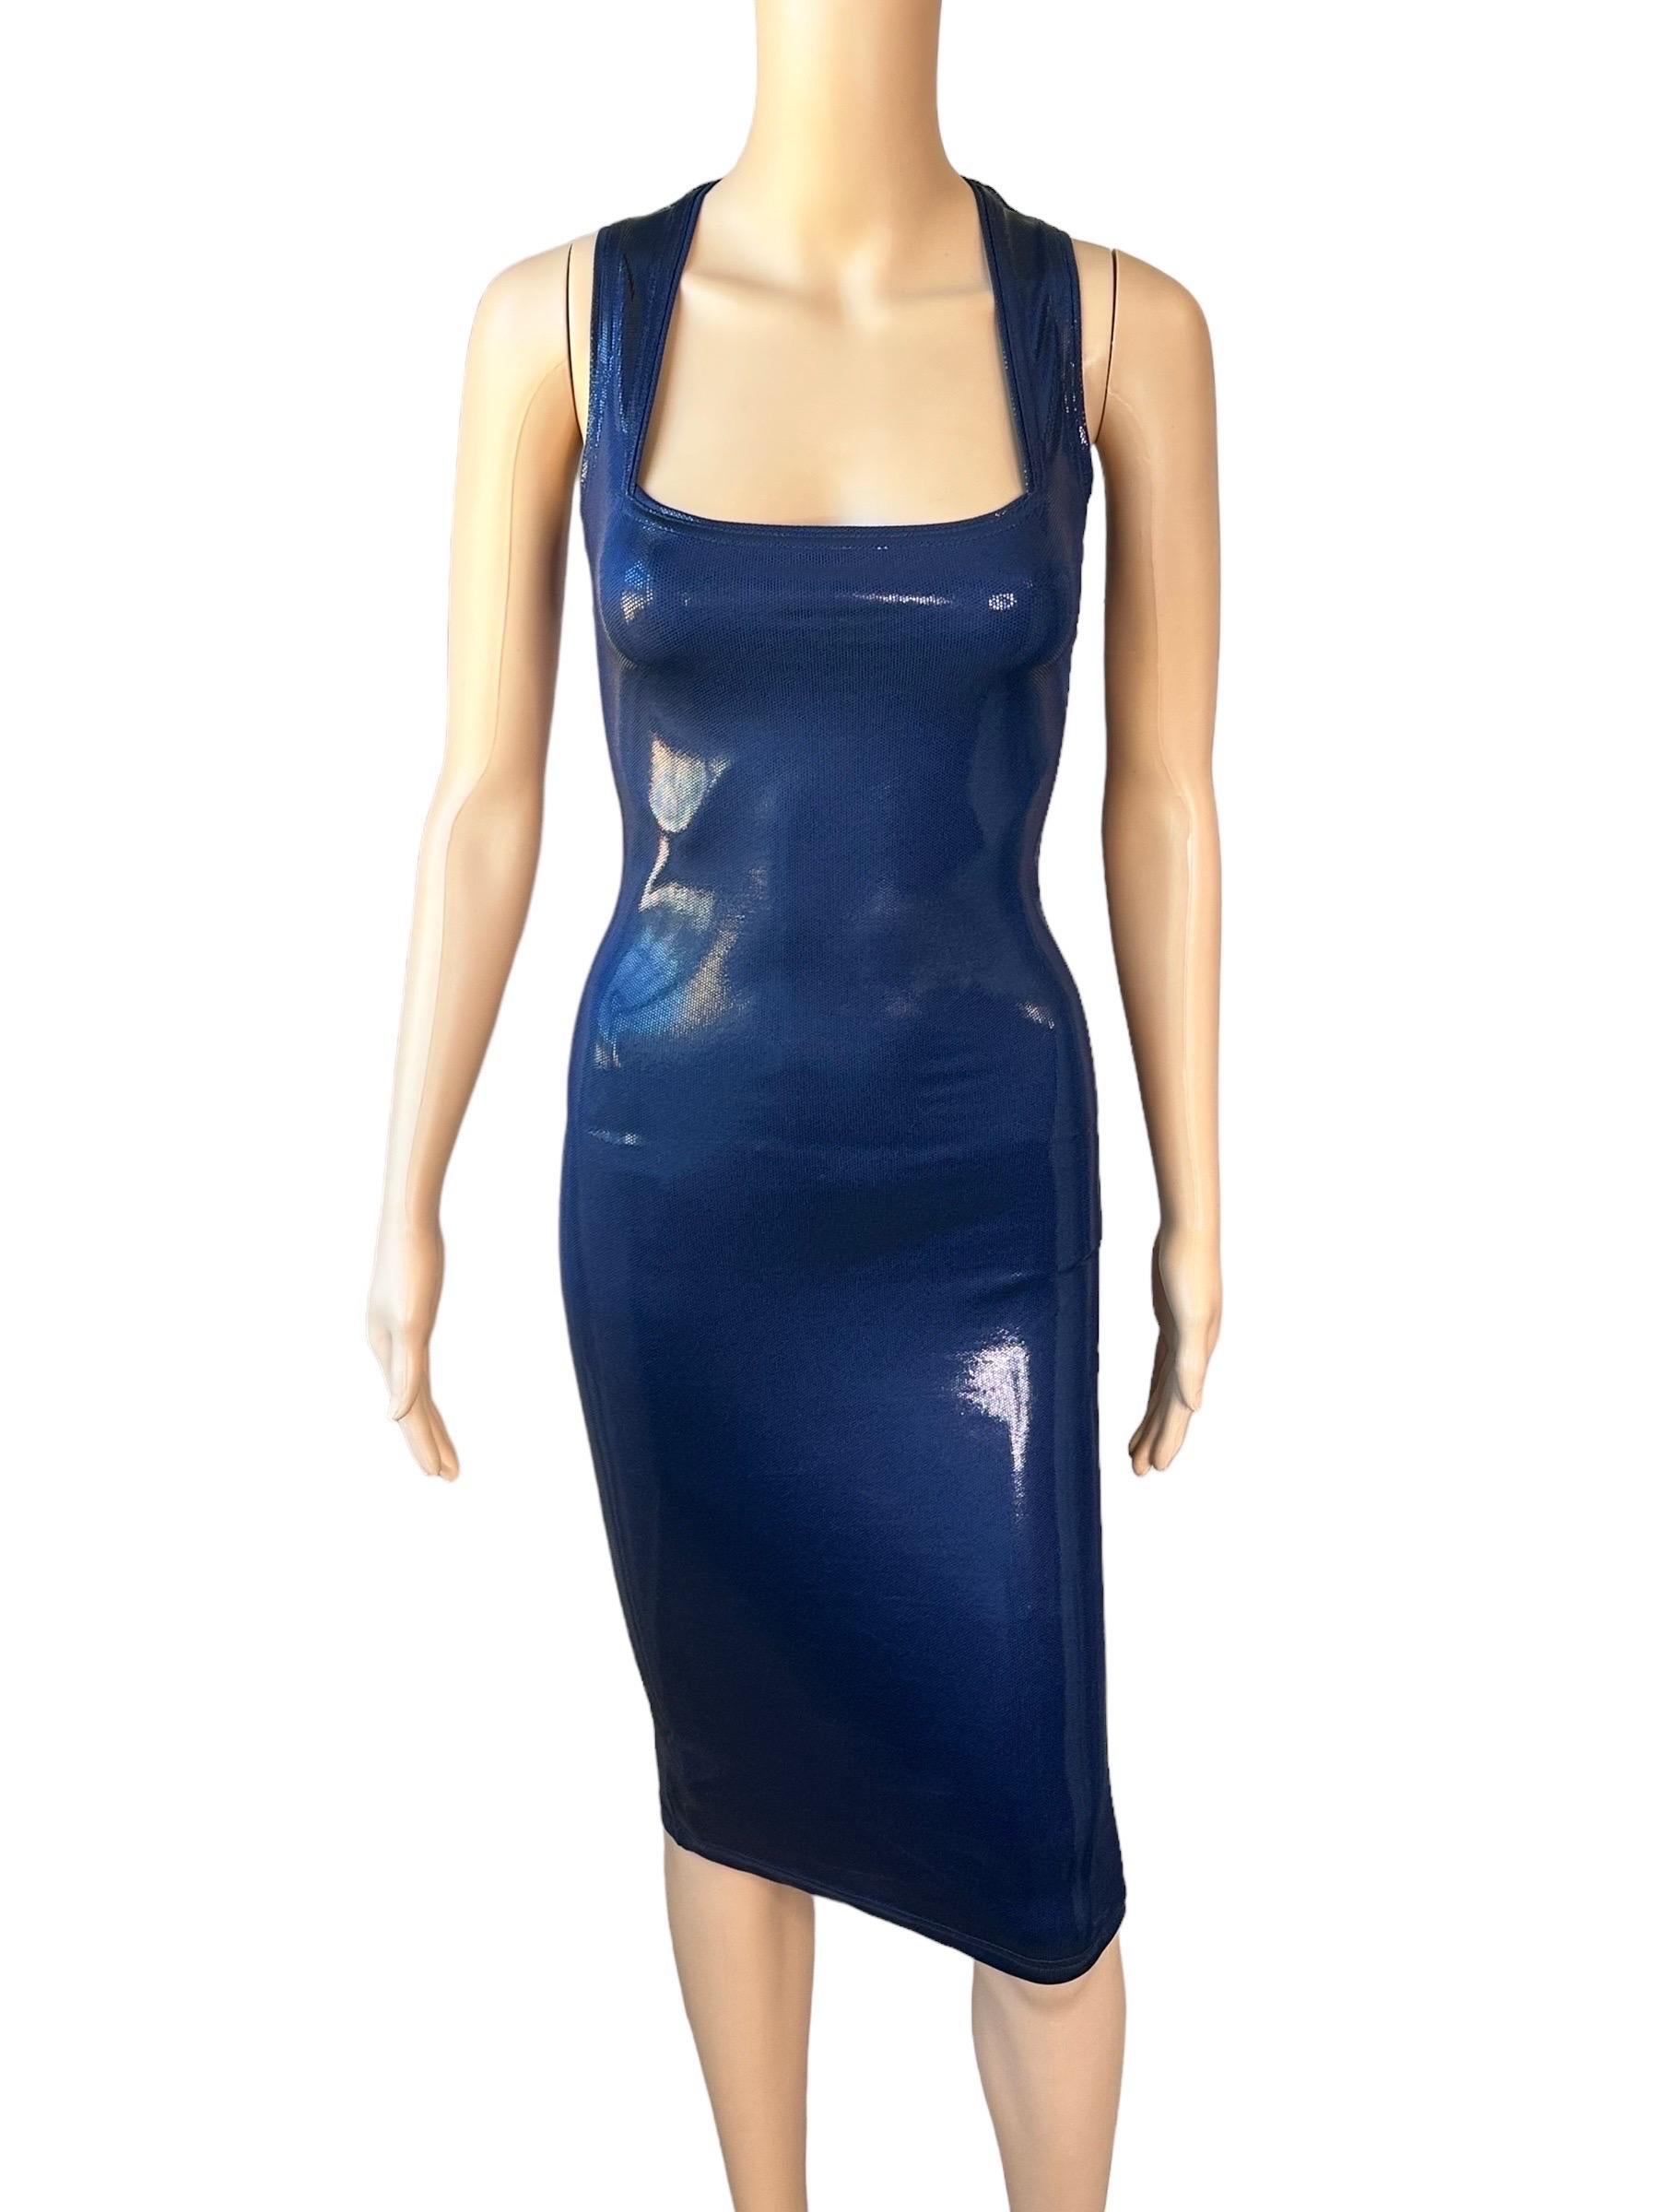 Gianni Versace c. 1994 Vintage Wet Look Stretch Bodycon Navy Blue Midi Dress 8